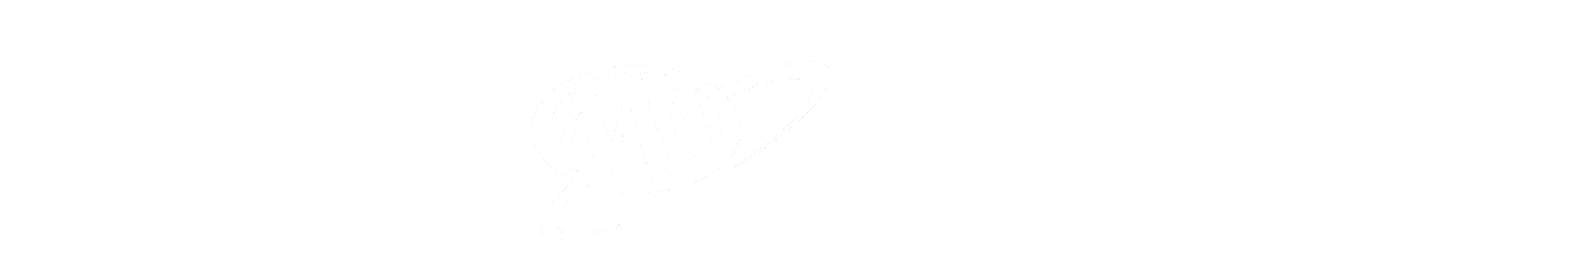 ClickIt or Ticket logo, AAA logo, Buckle-Up Arrive Alive DE logo